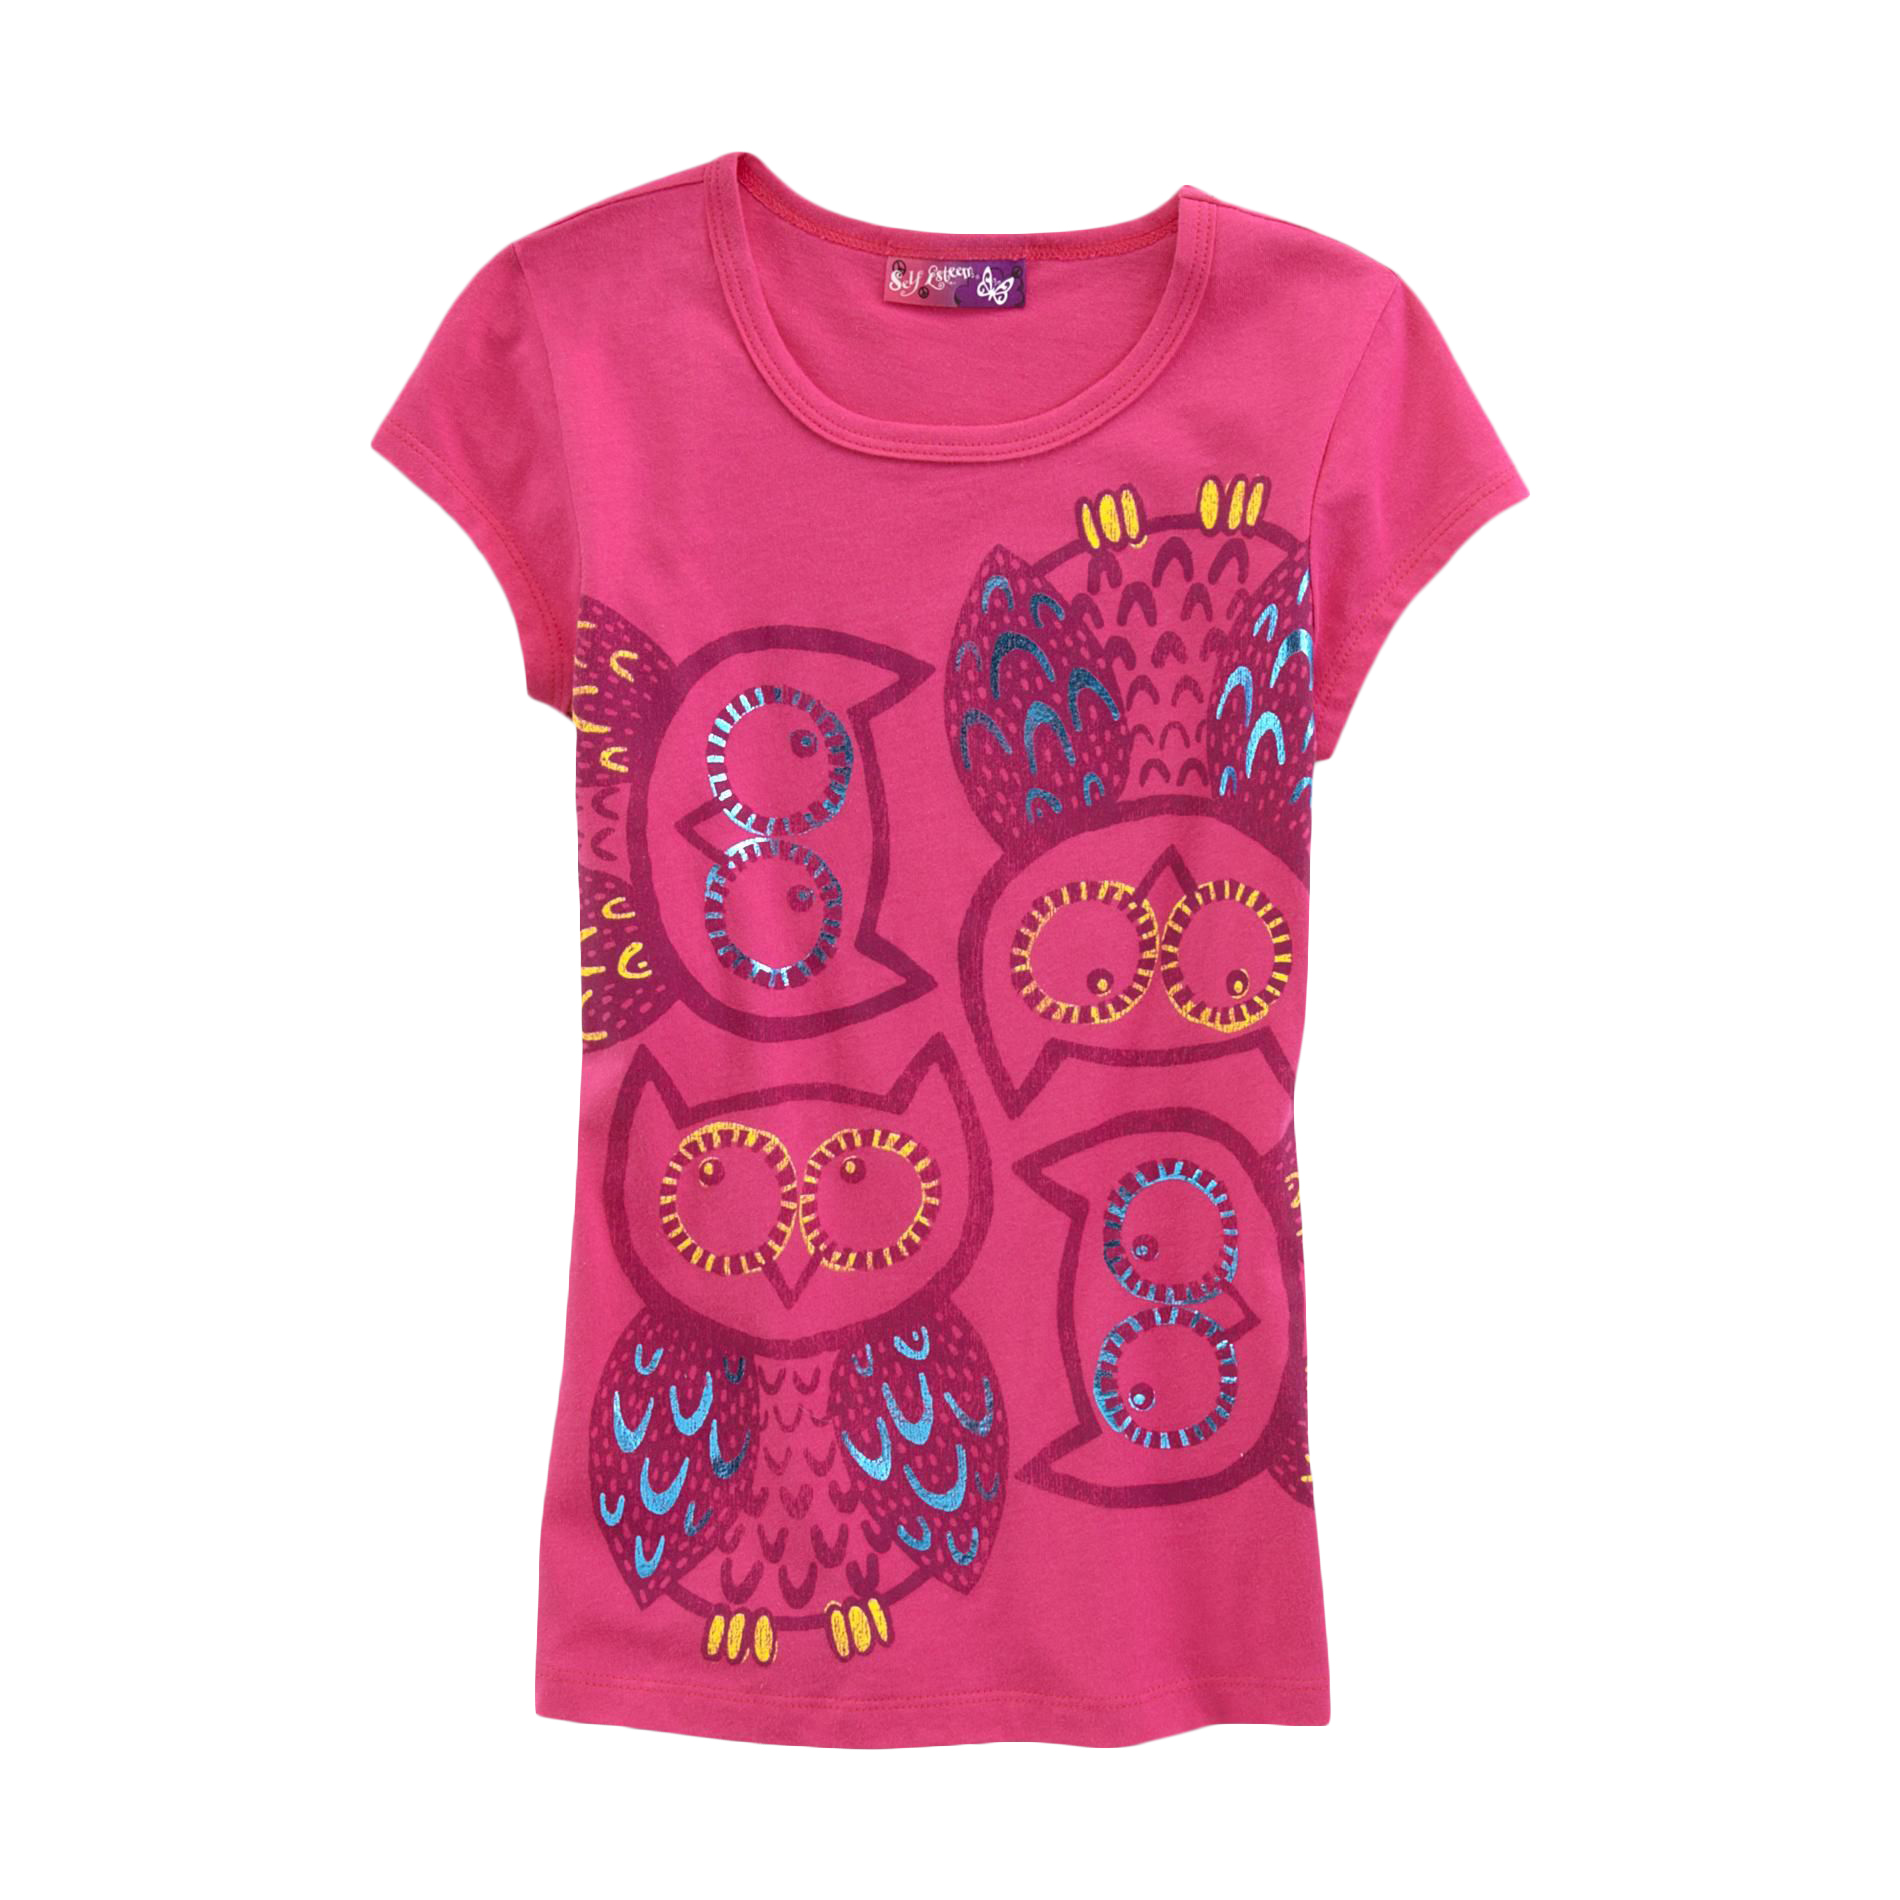 Self Esteem Girl's Graphic T-Shirt - Owls